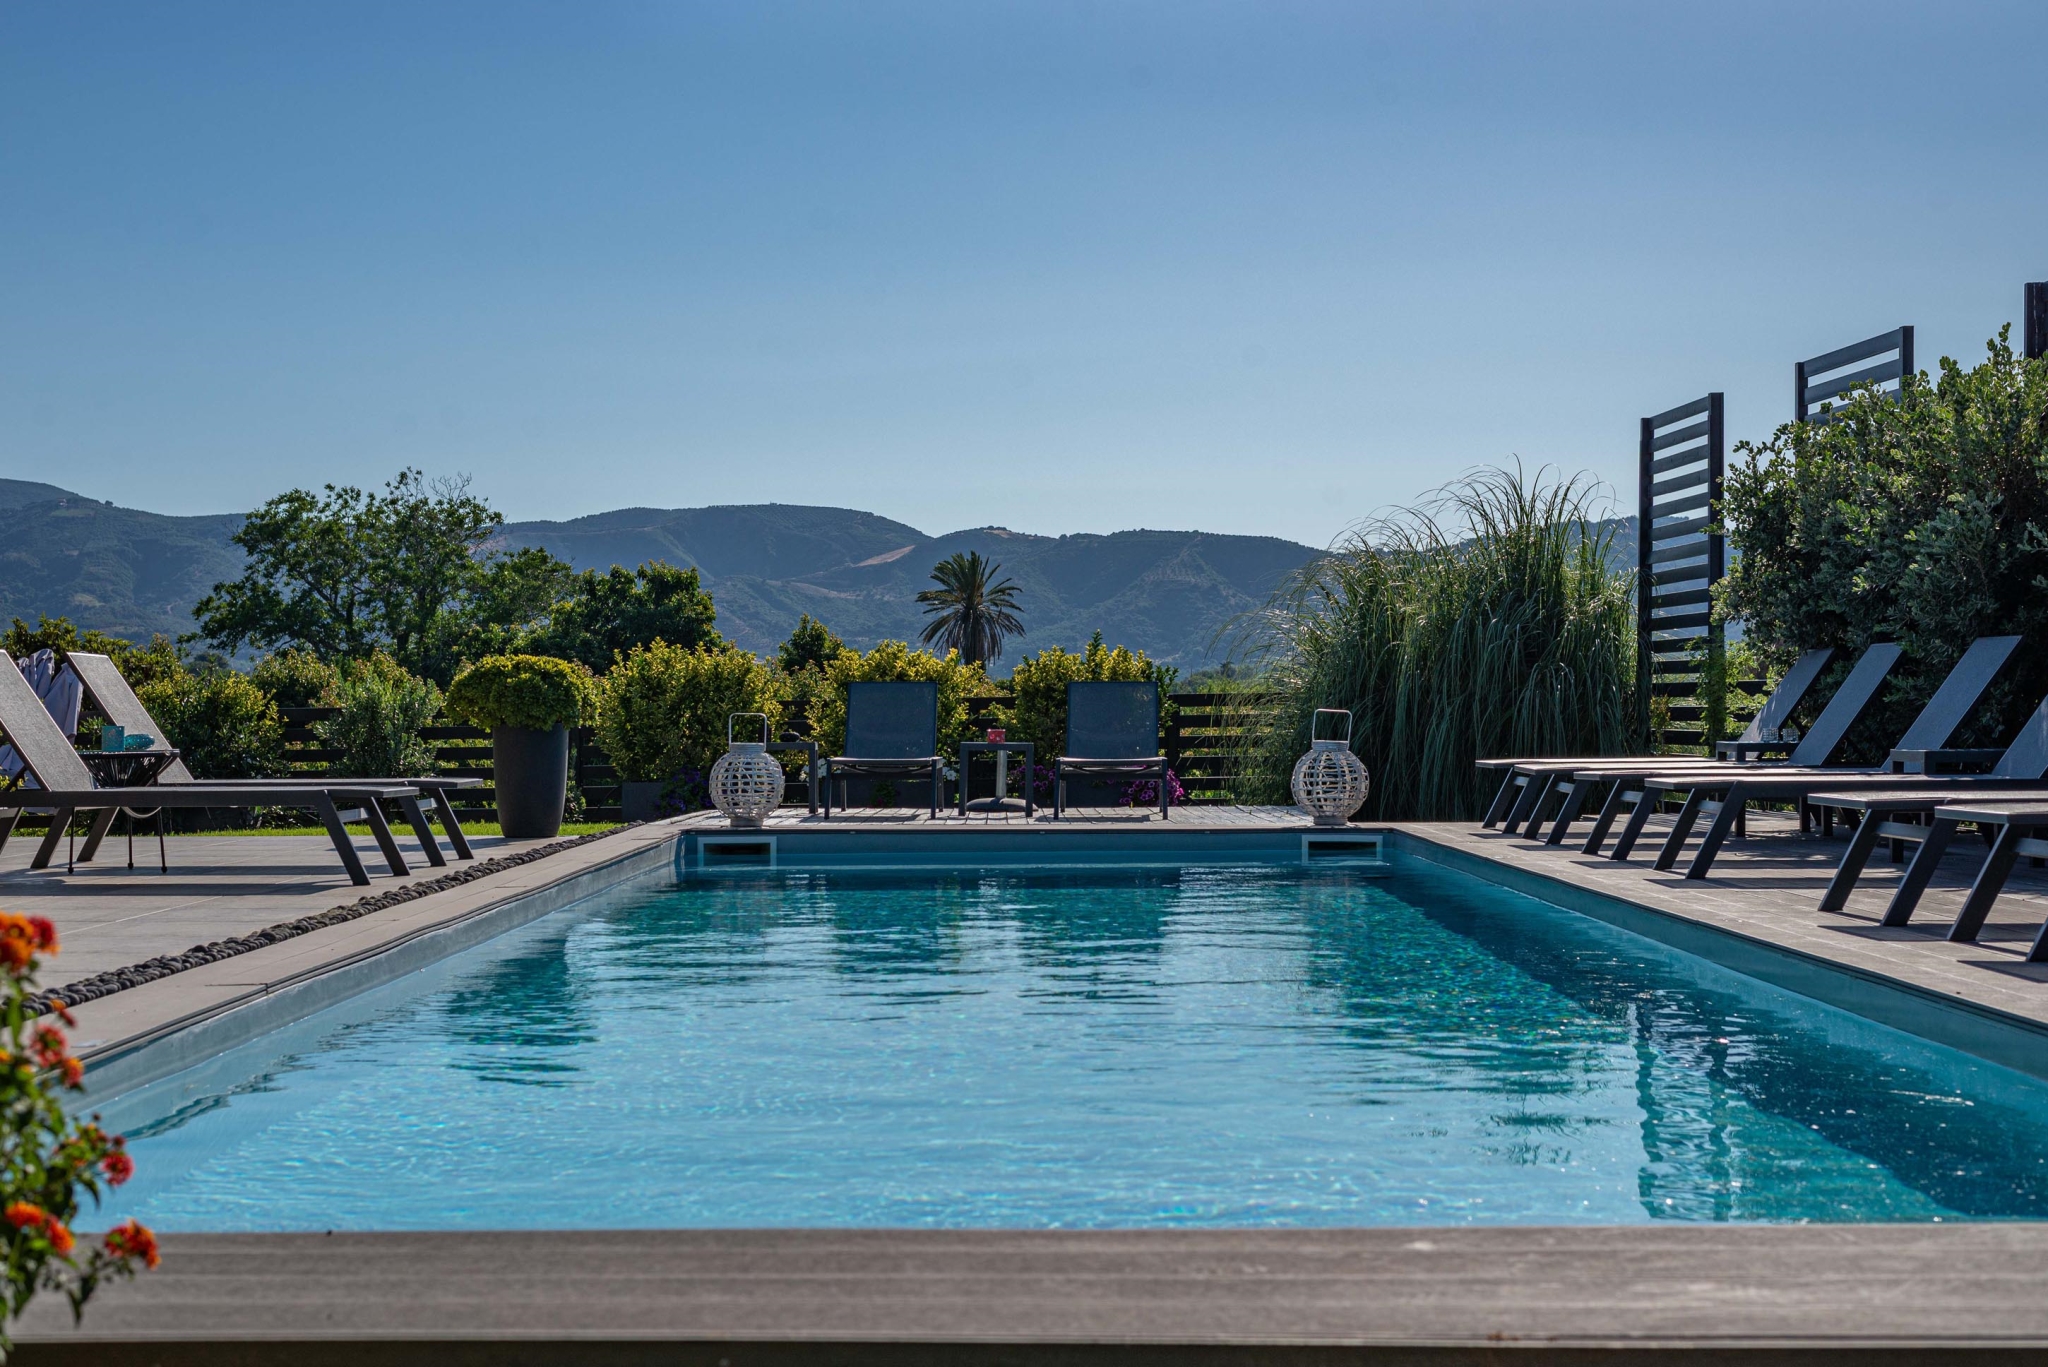  Vega villa, modern,luxury,private pool